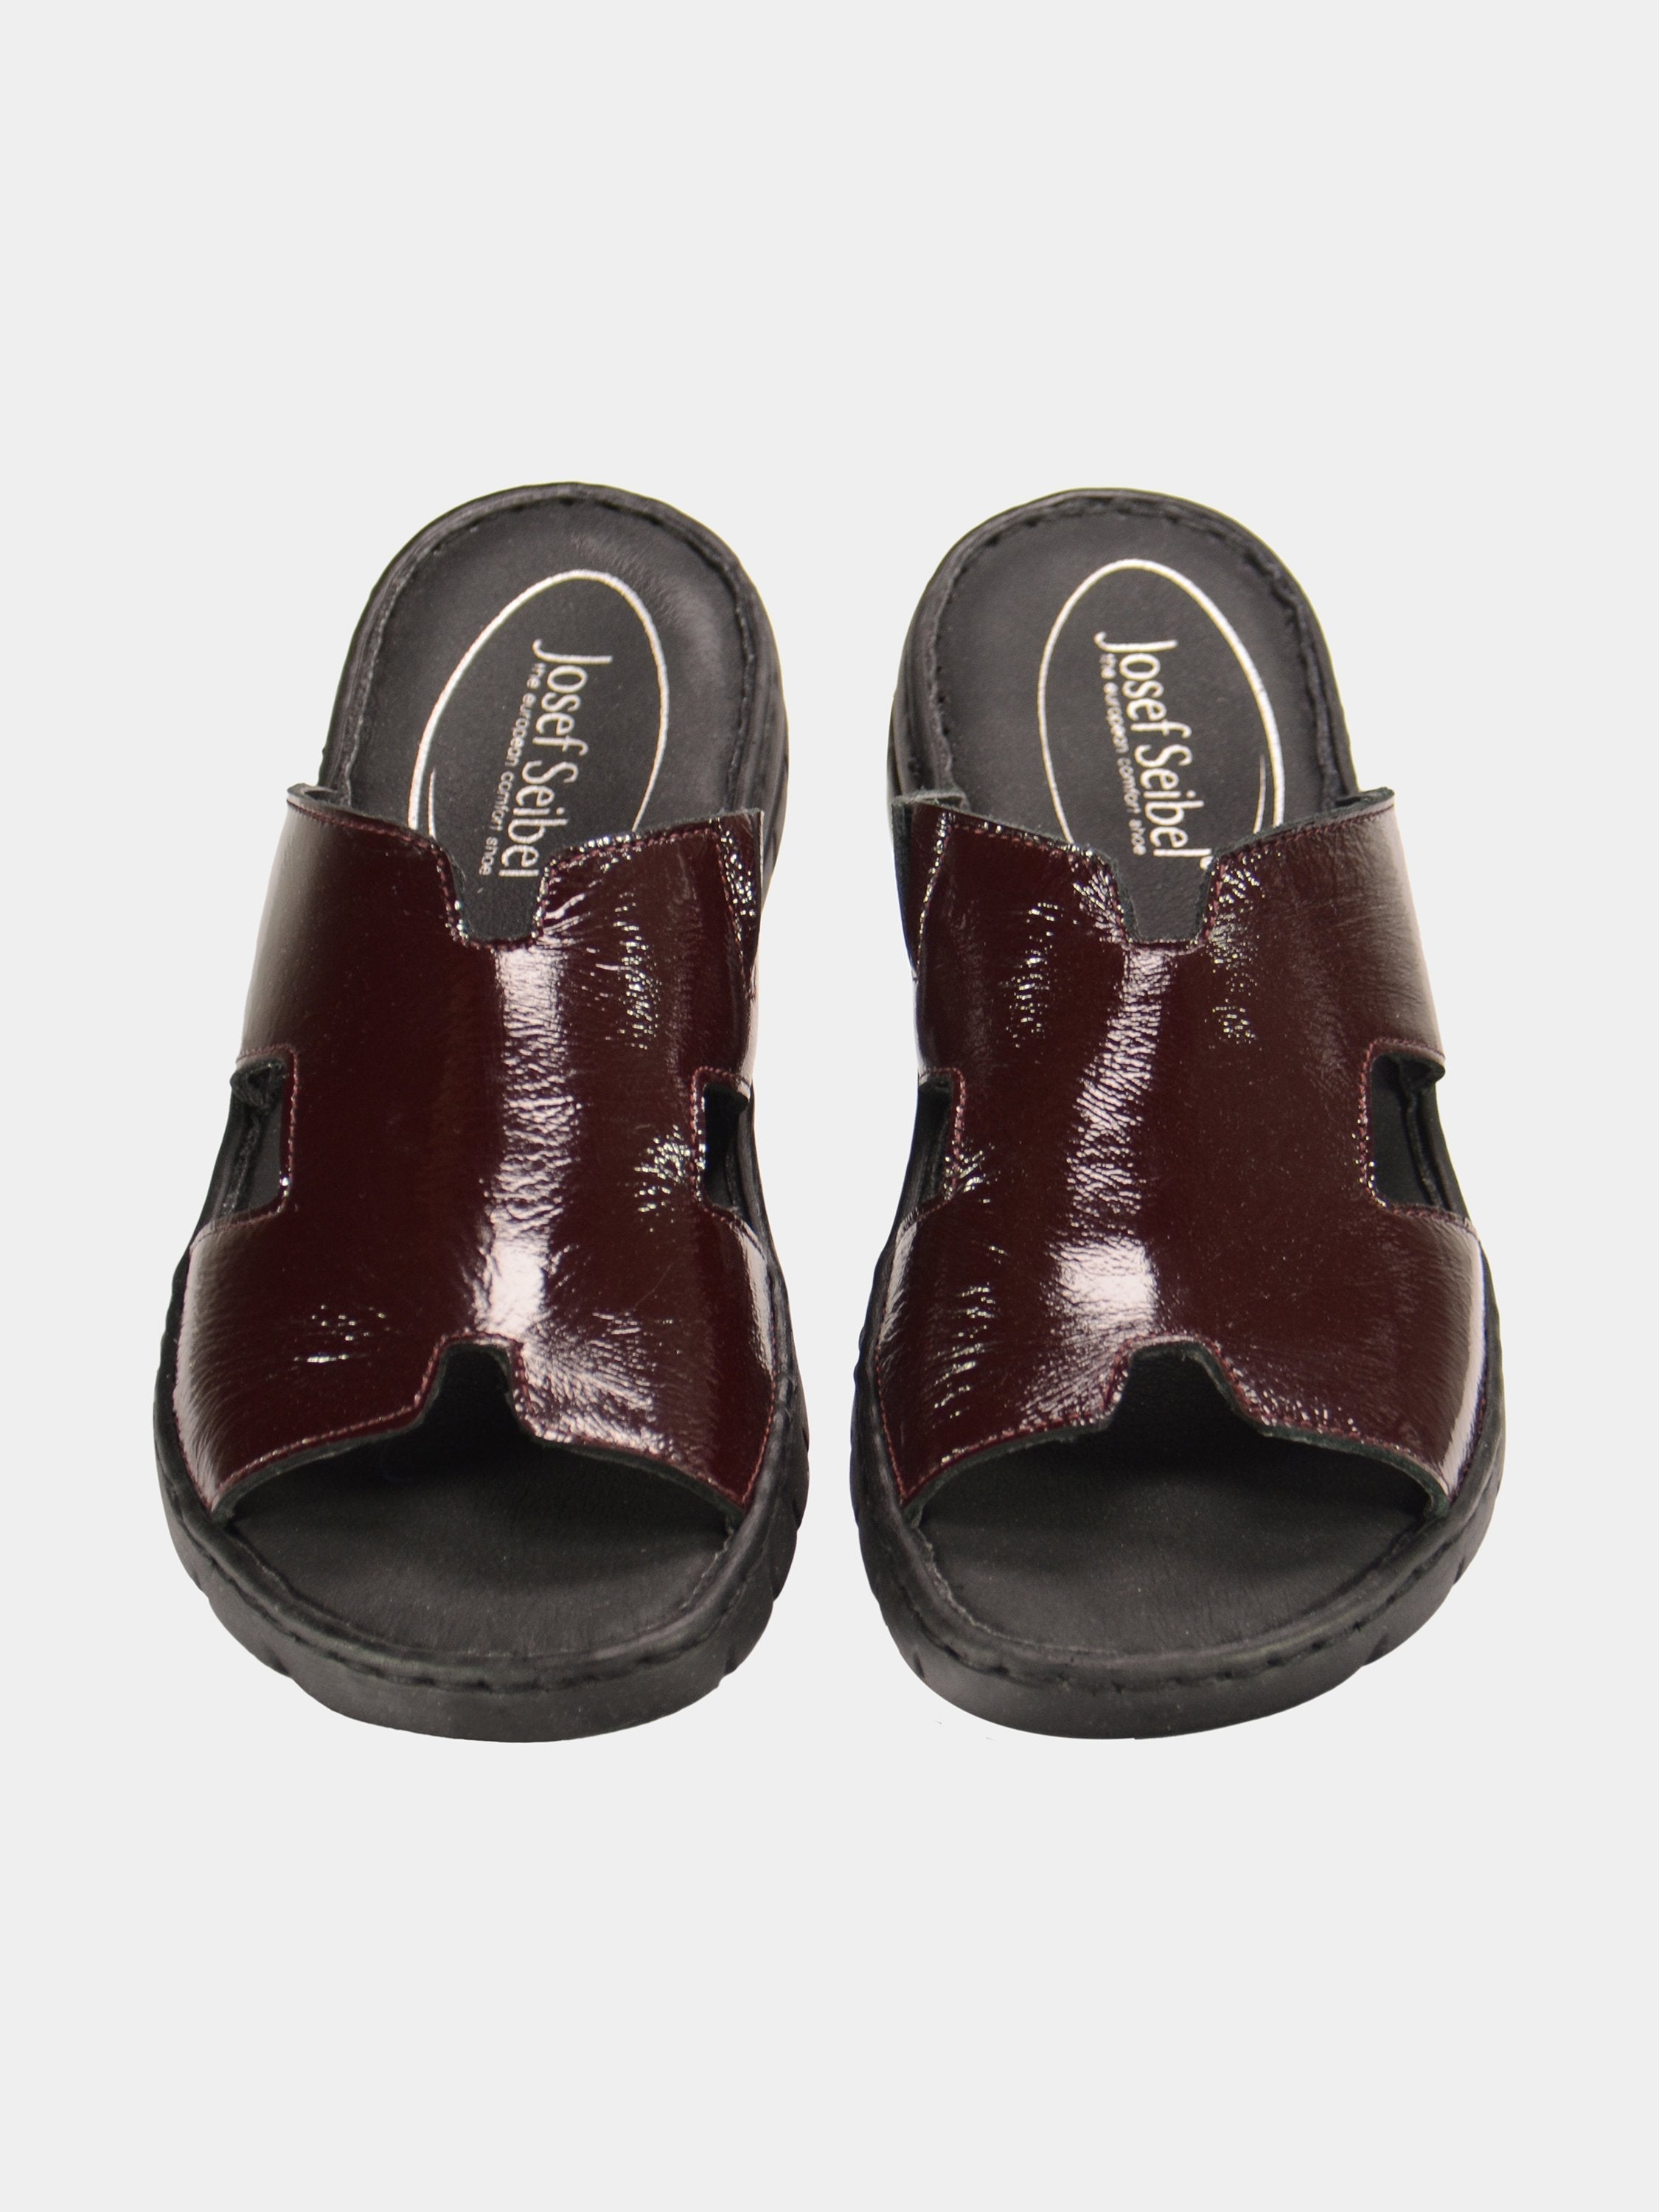 Josef Seibel Women's Shiny Leather Sandals #color_Maroon